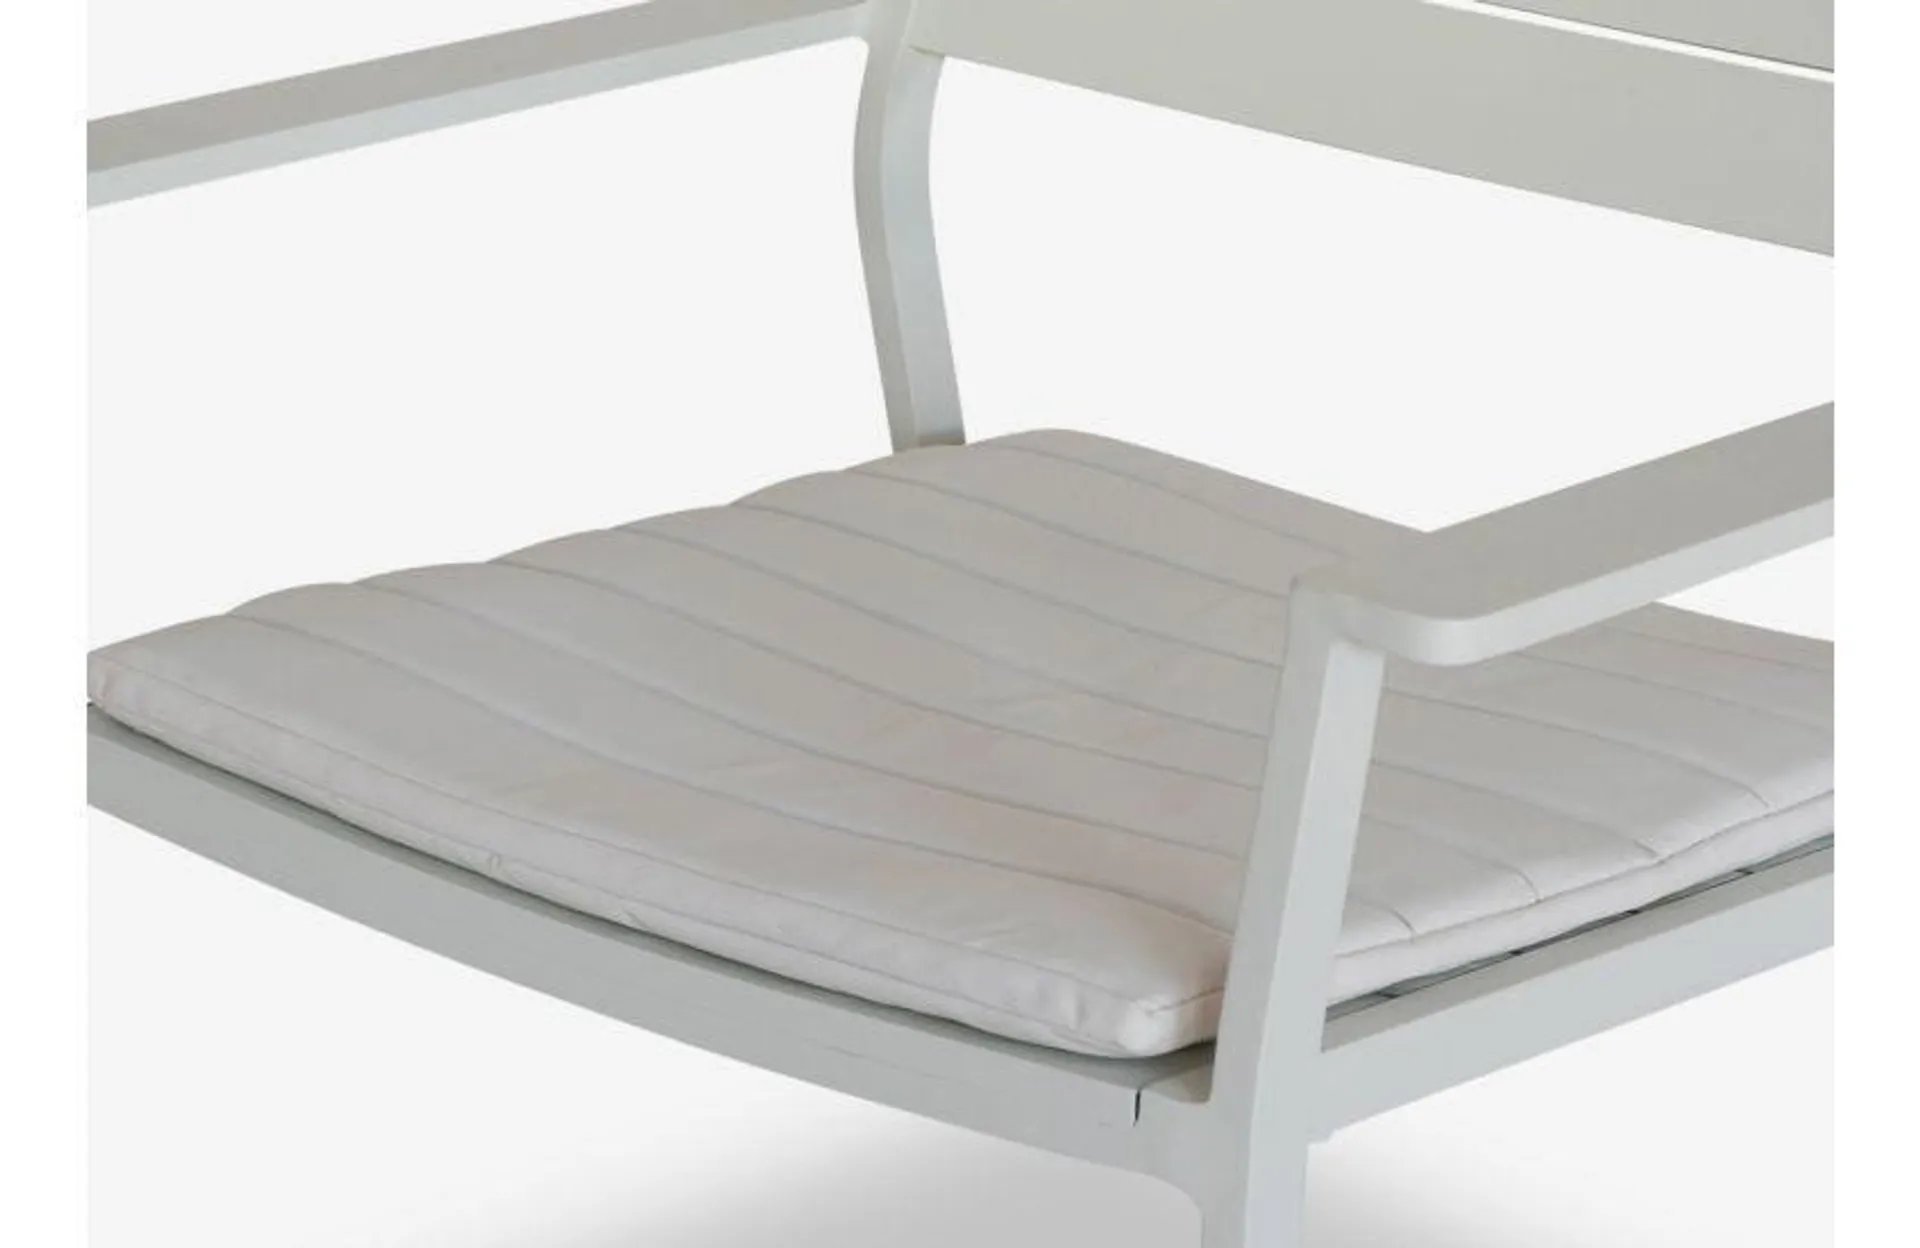 EOS Outdoor Lounge Chair Cushion White